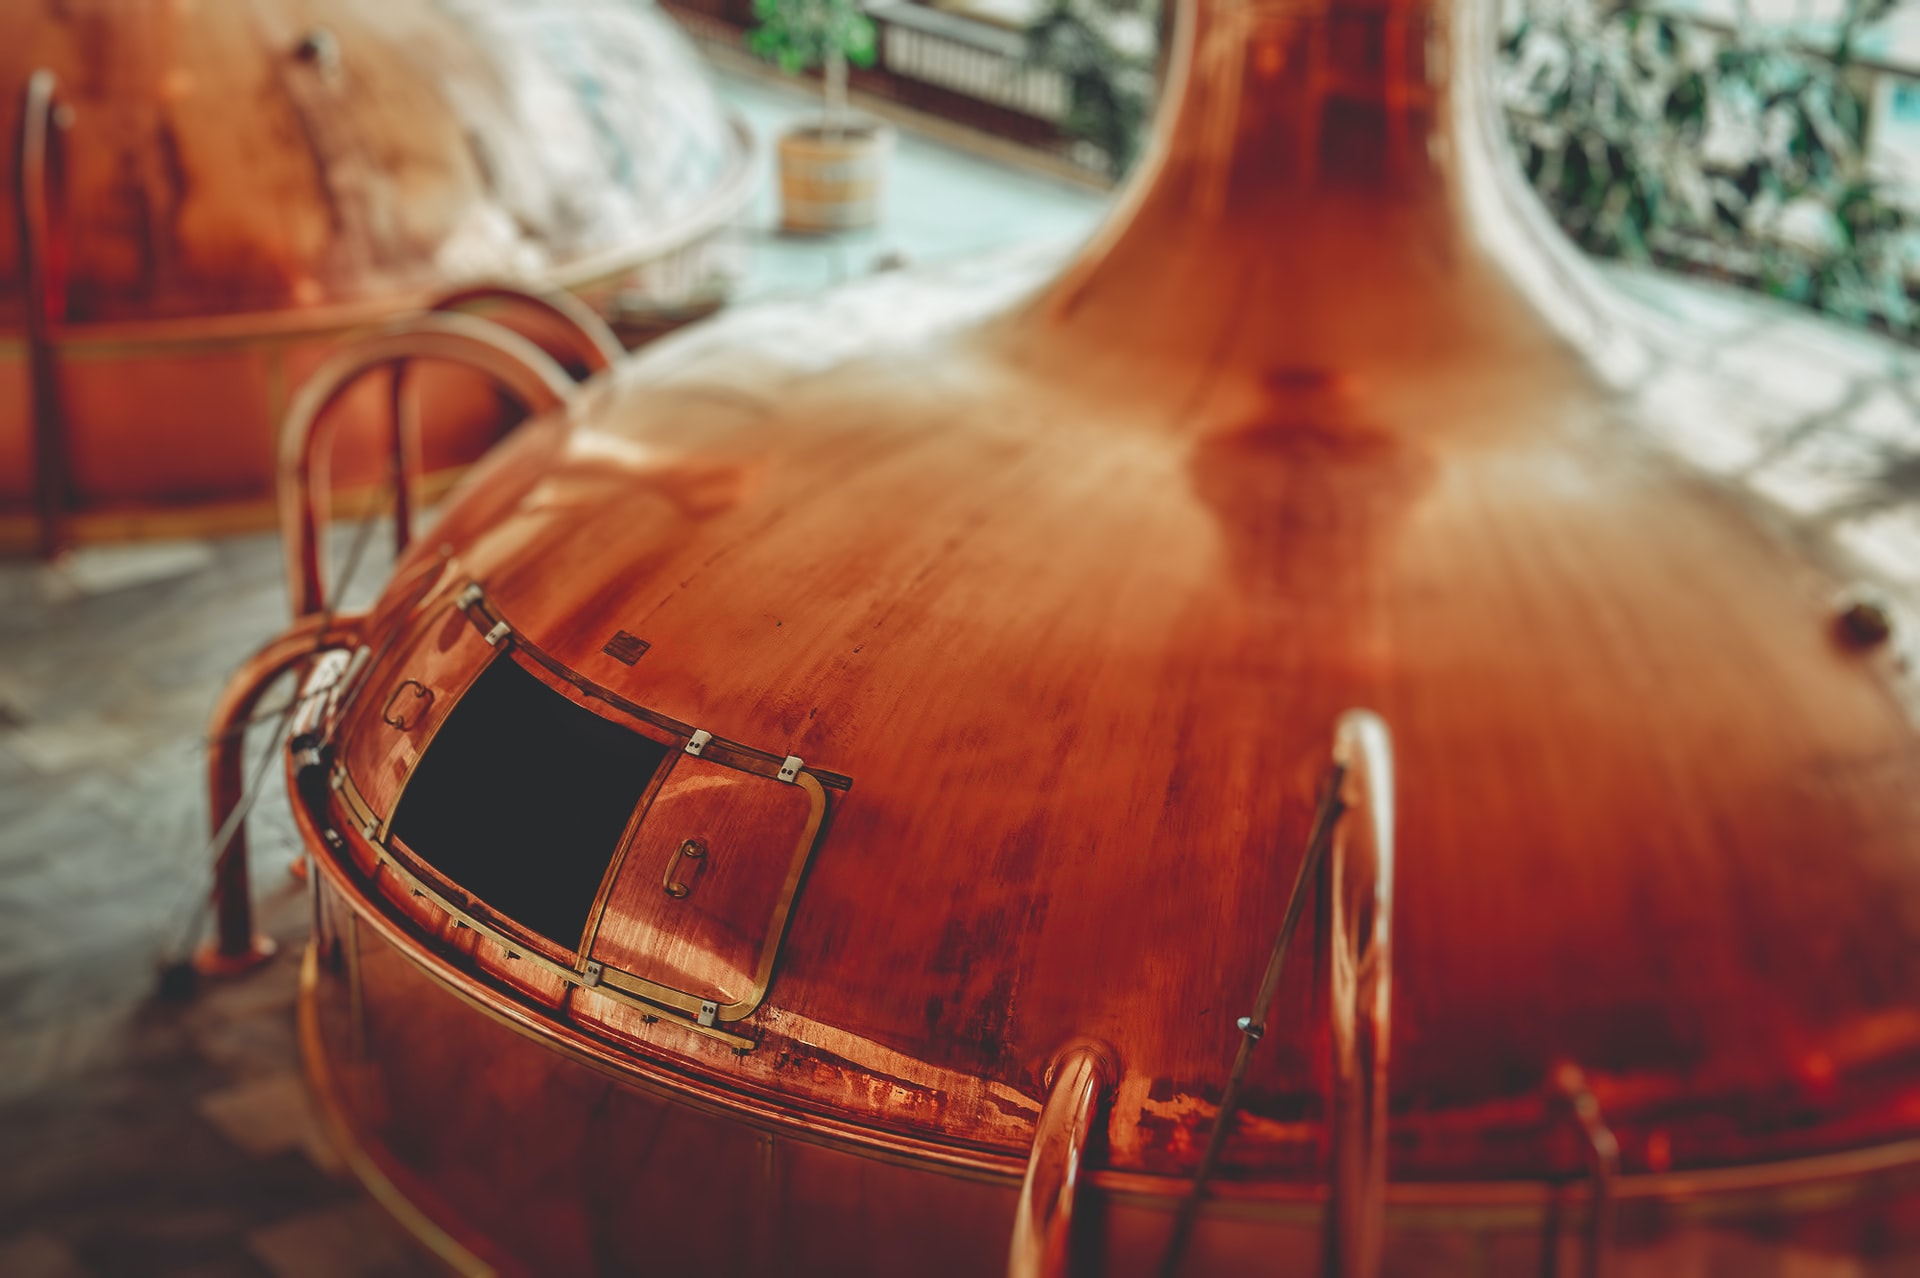 Copper alcohol distillery